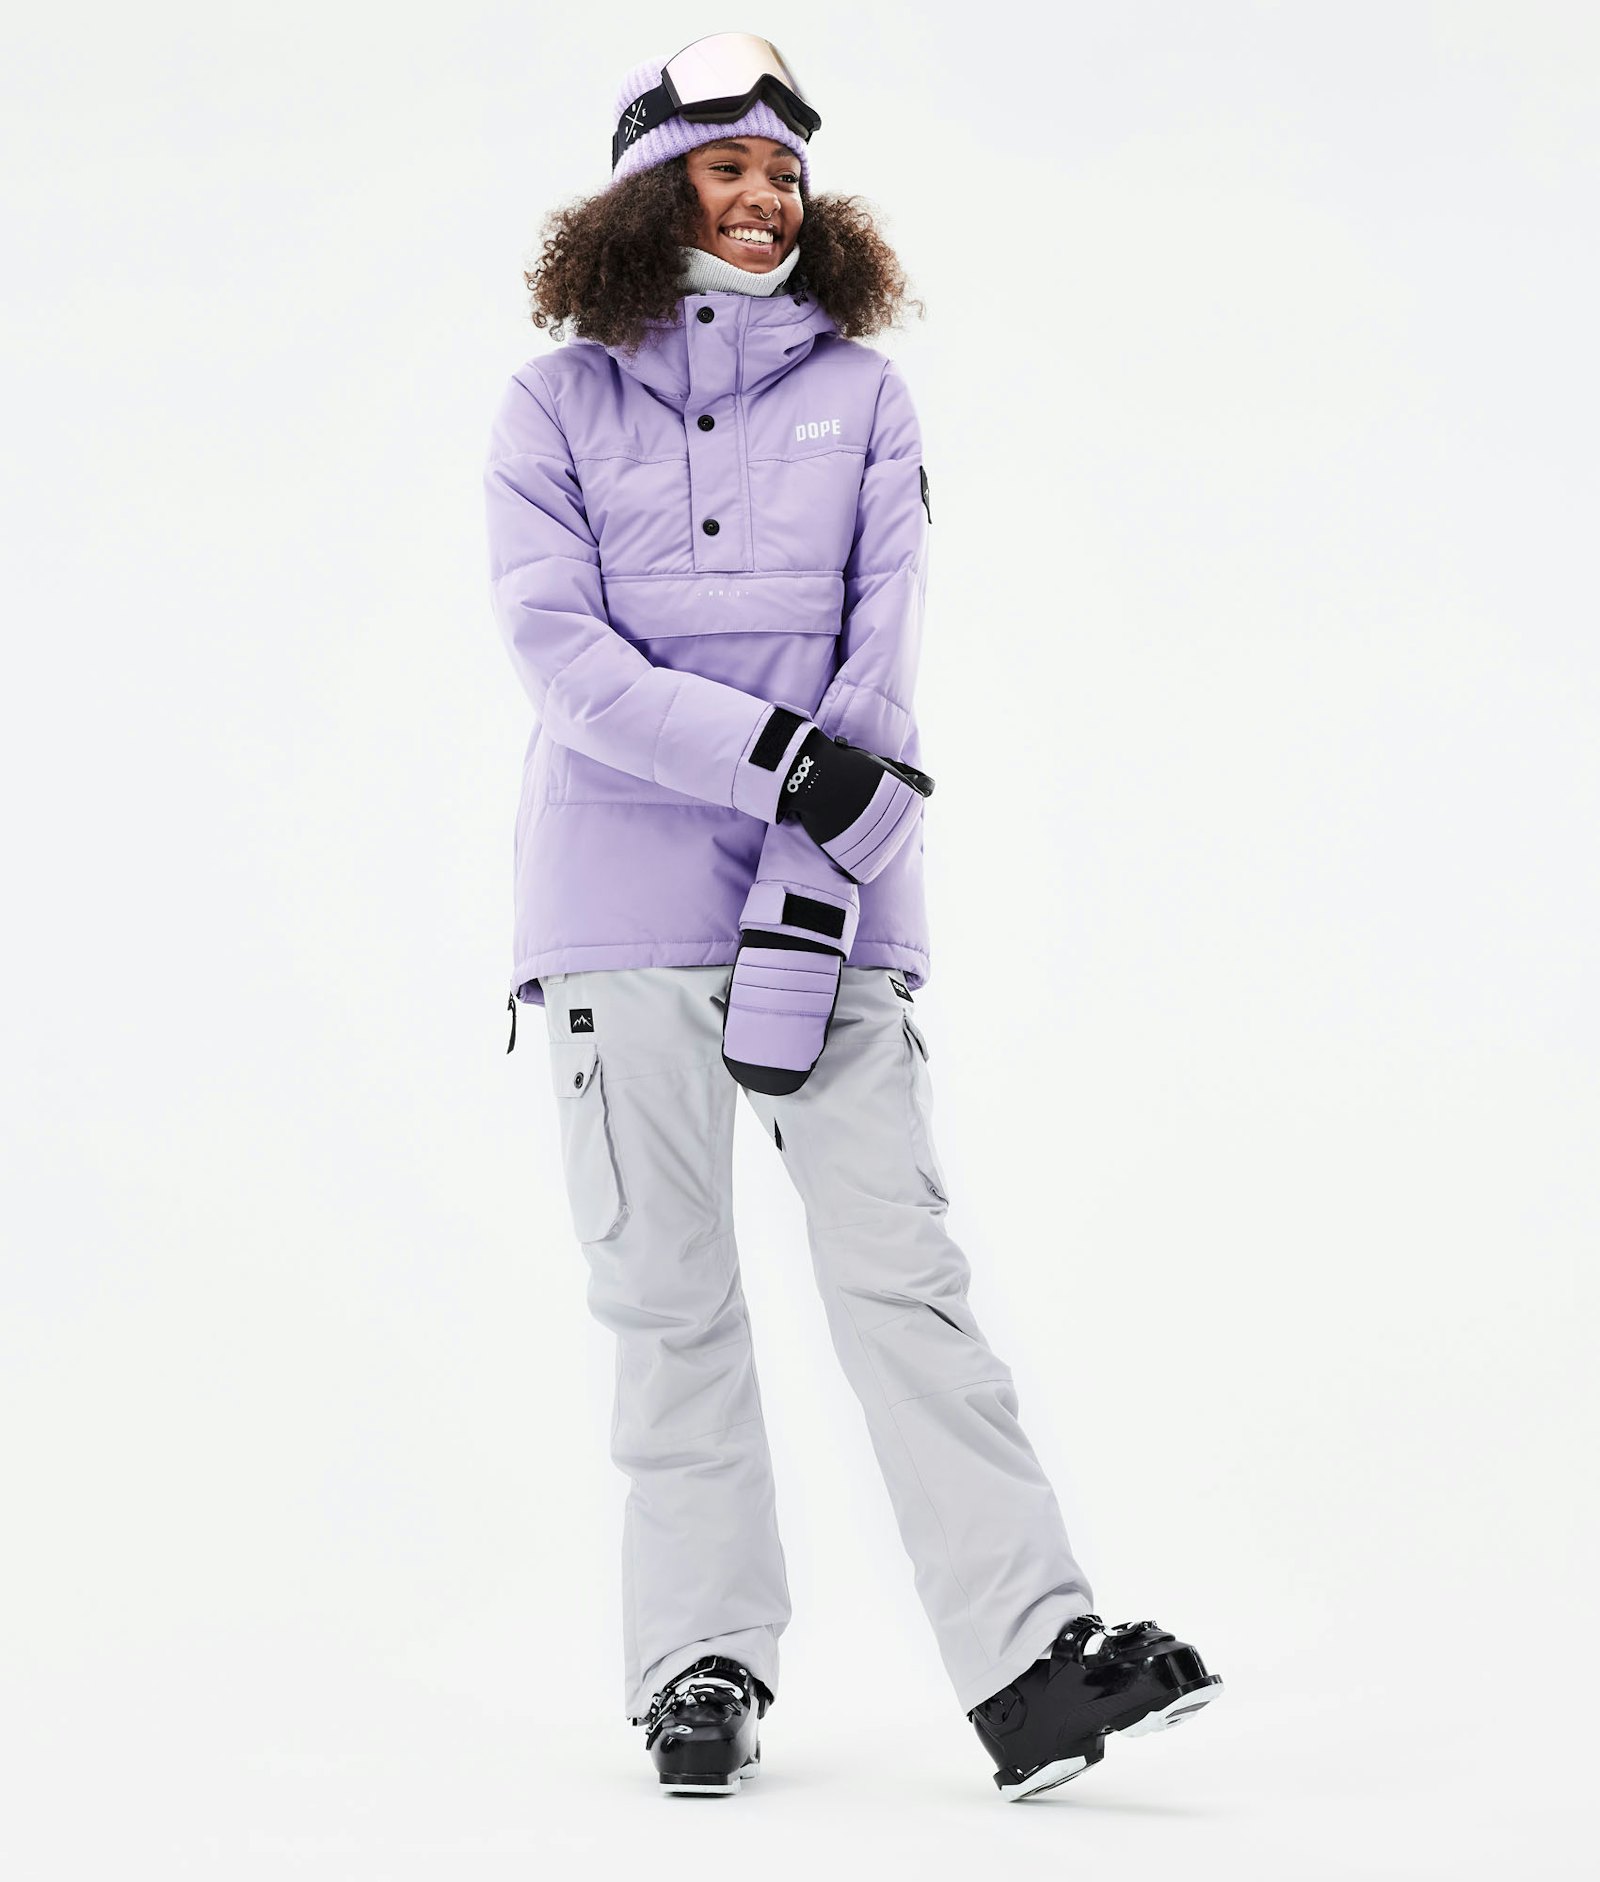 Dope Puffer W 2021 Ski Jacket Women Faded Violet